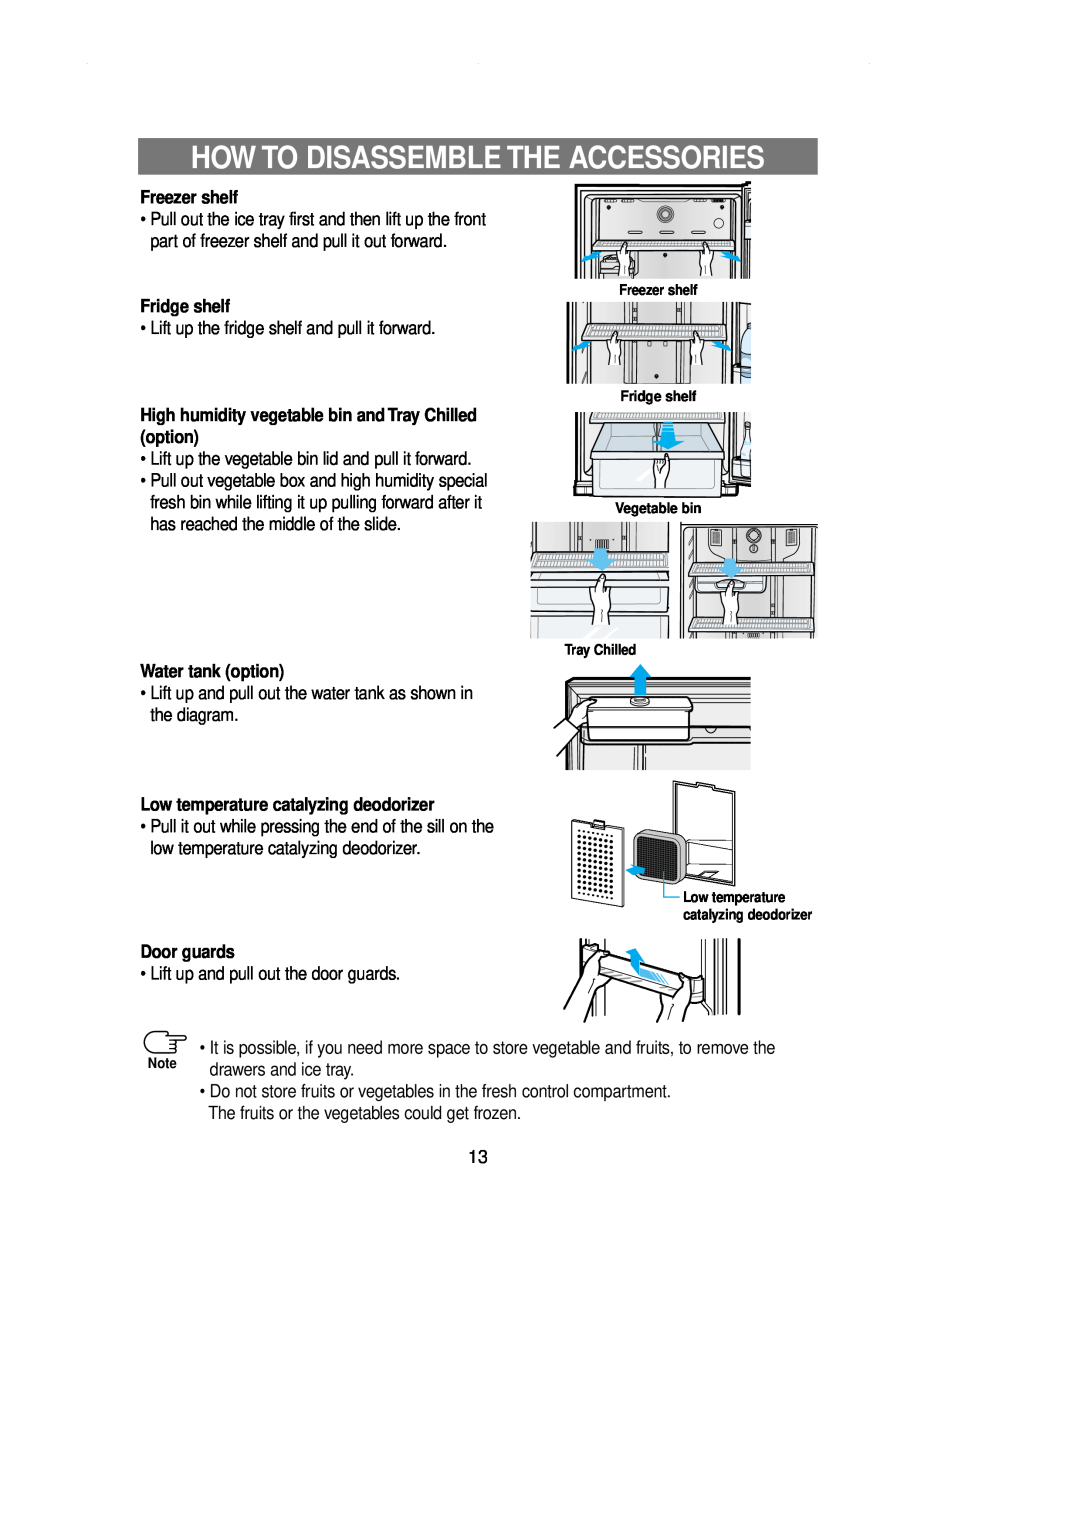 Samsung DA99-00743A How To Disassemble The Accessories, Freezer shelf, Fridge shelf, Water tank option, Door guards 